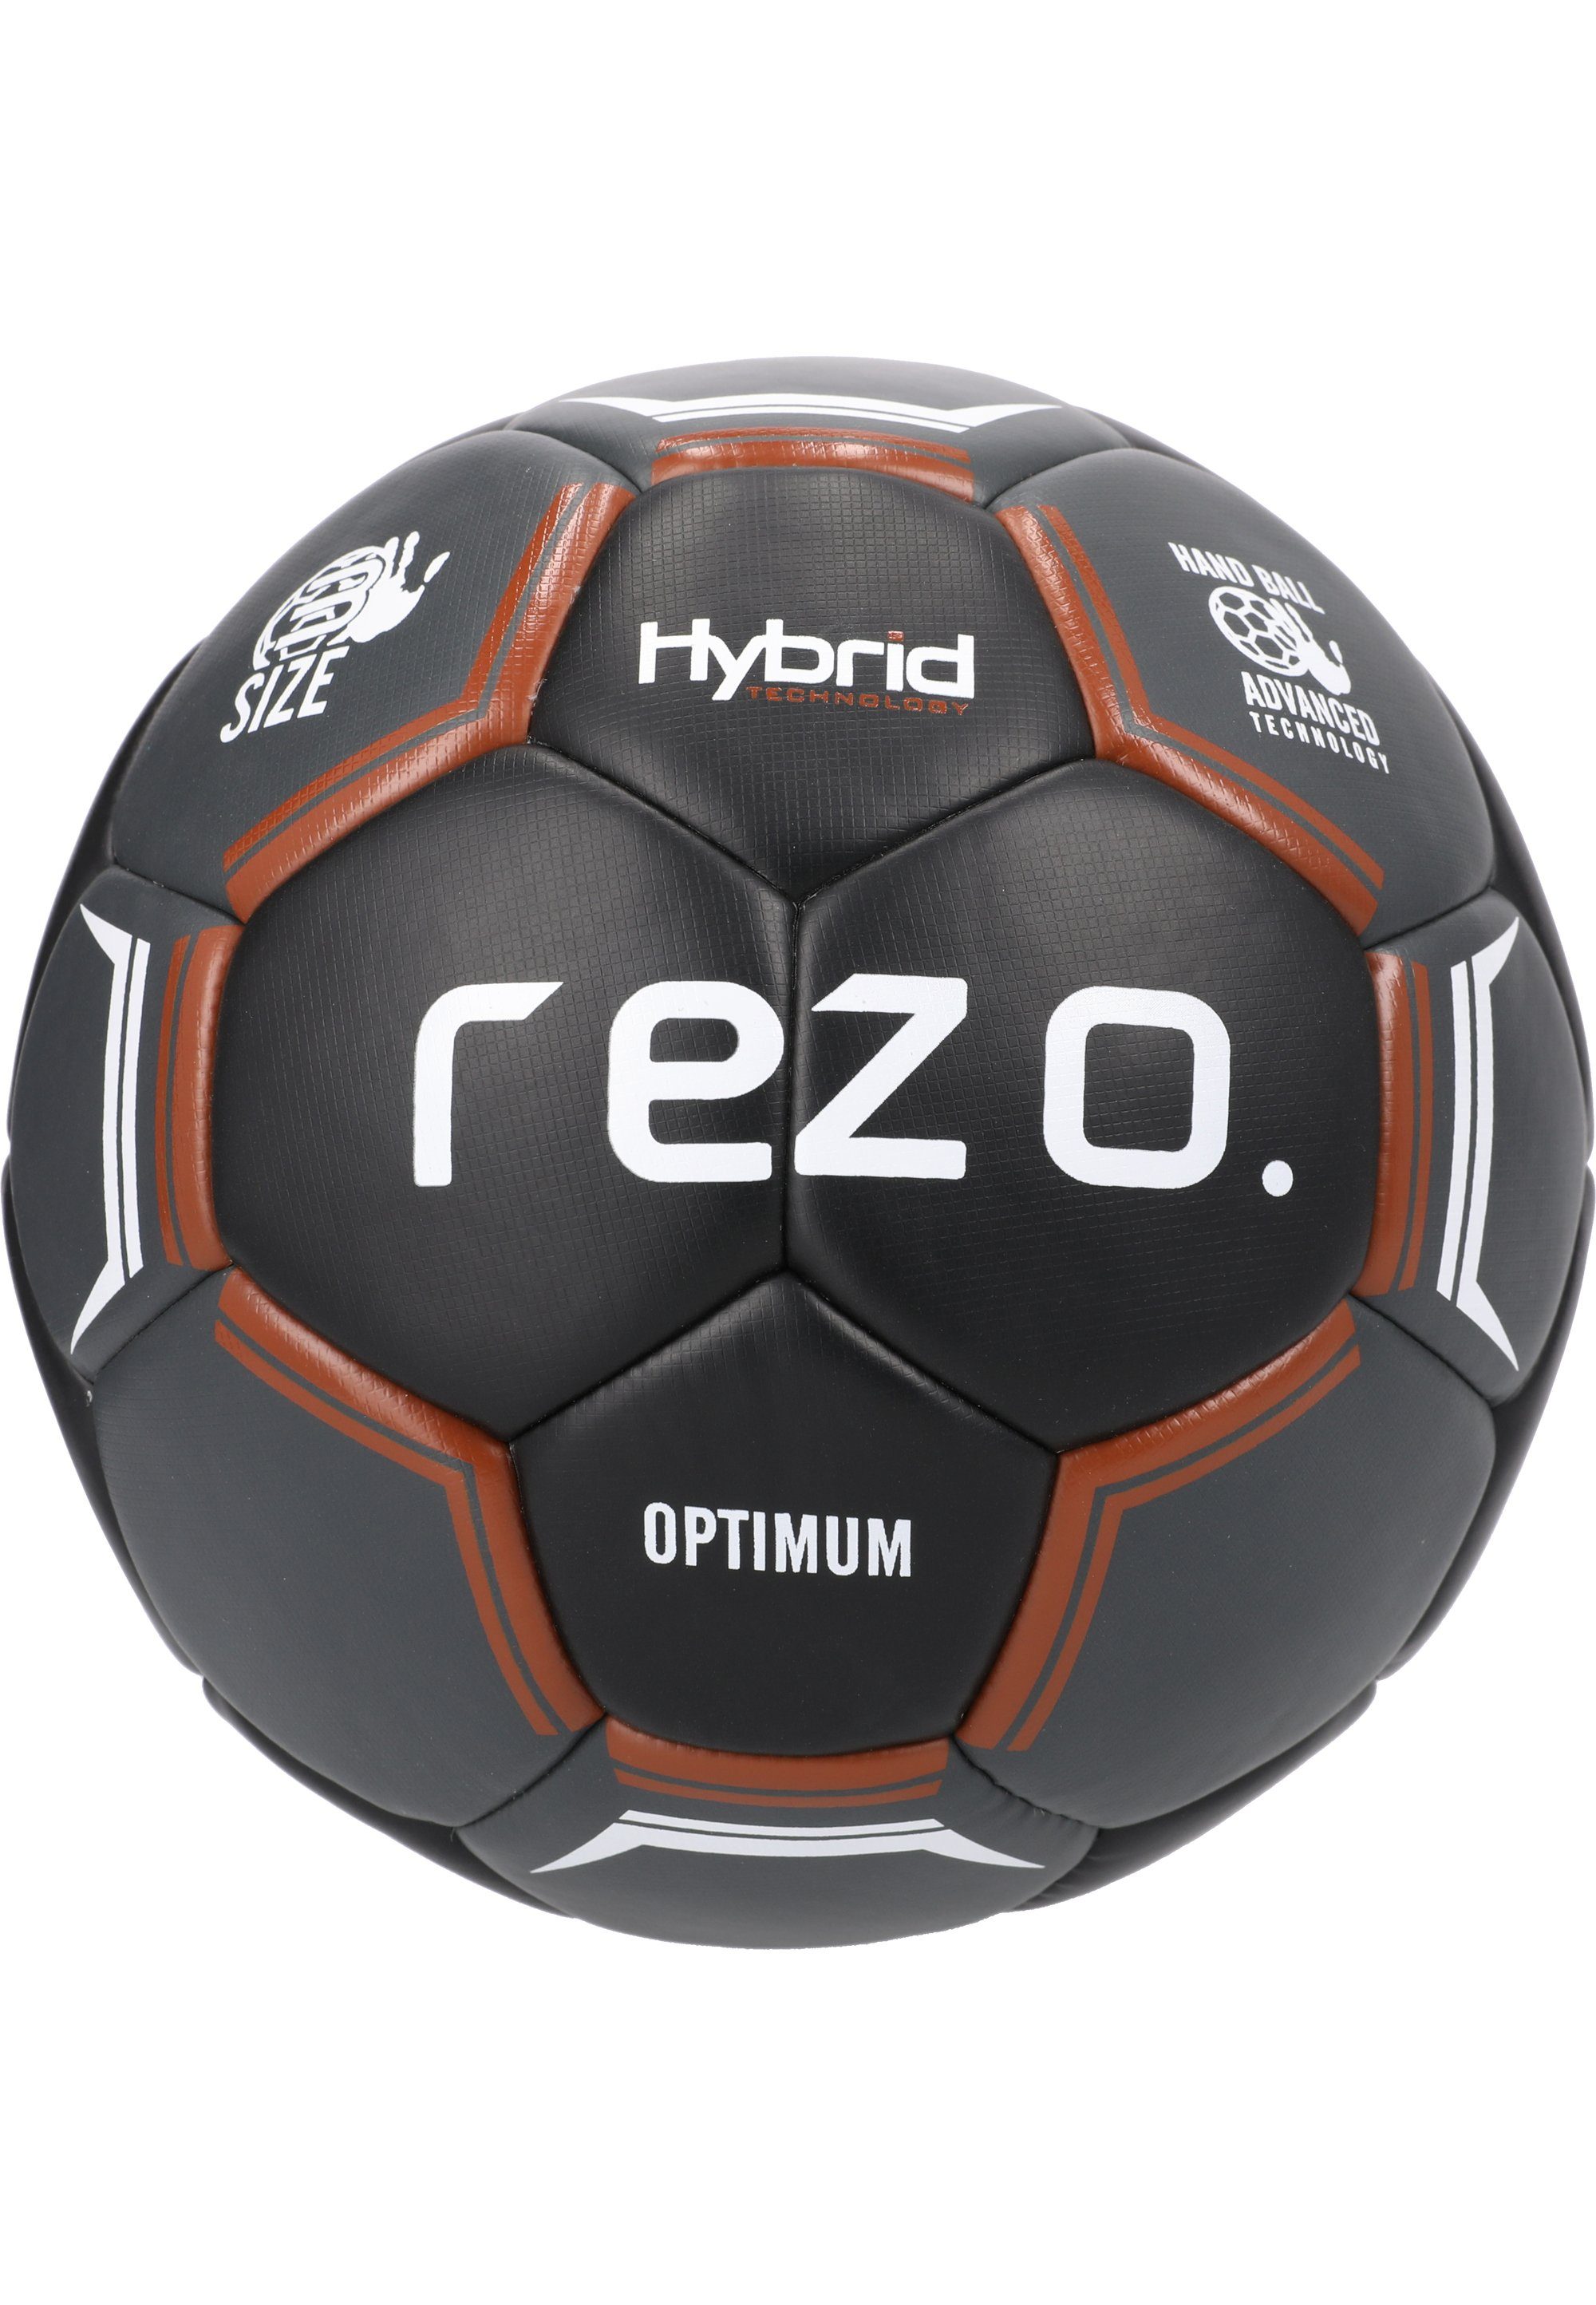 griffiger Optimum, Handball mit Oberfläche Rezo